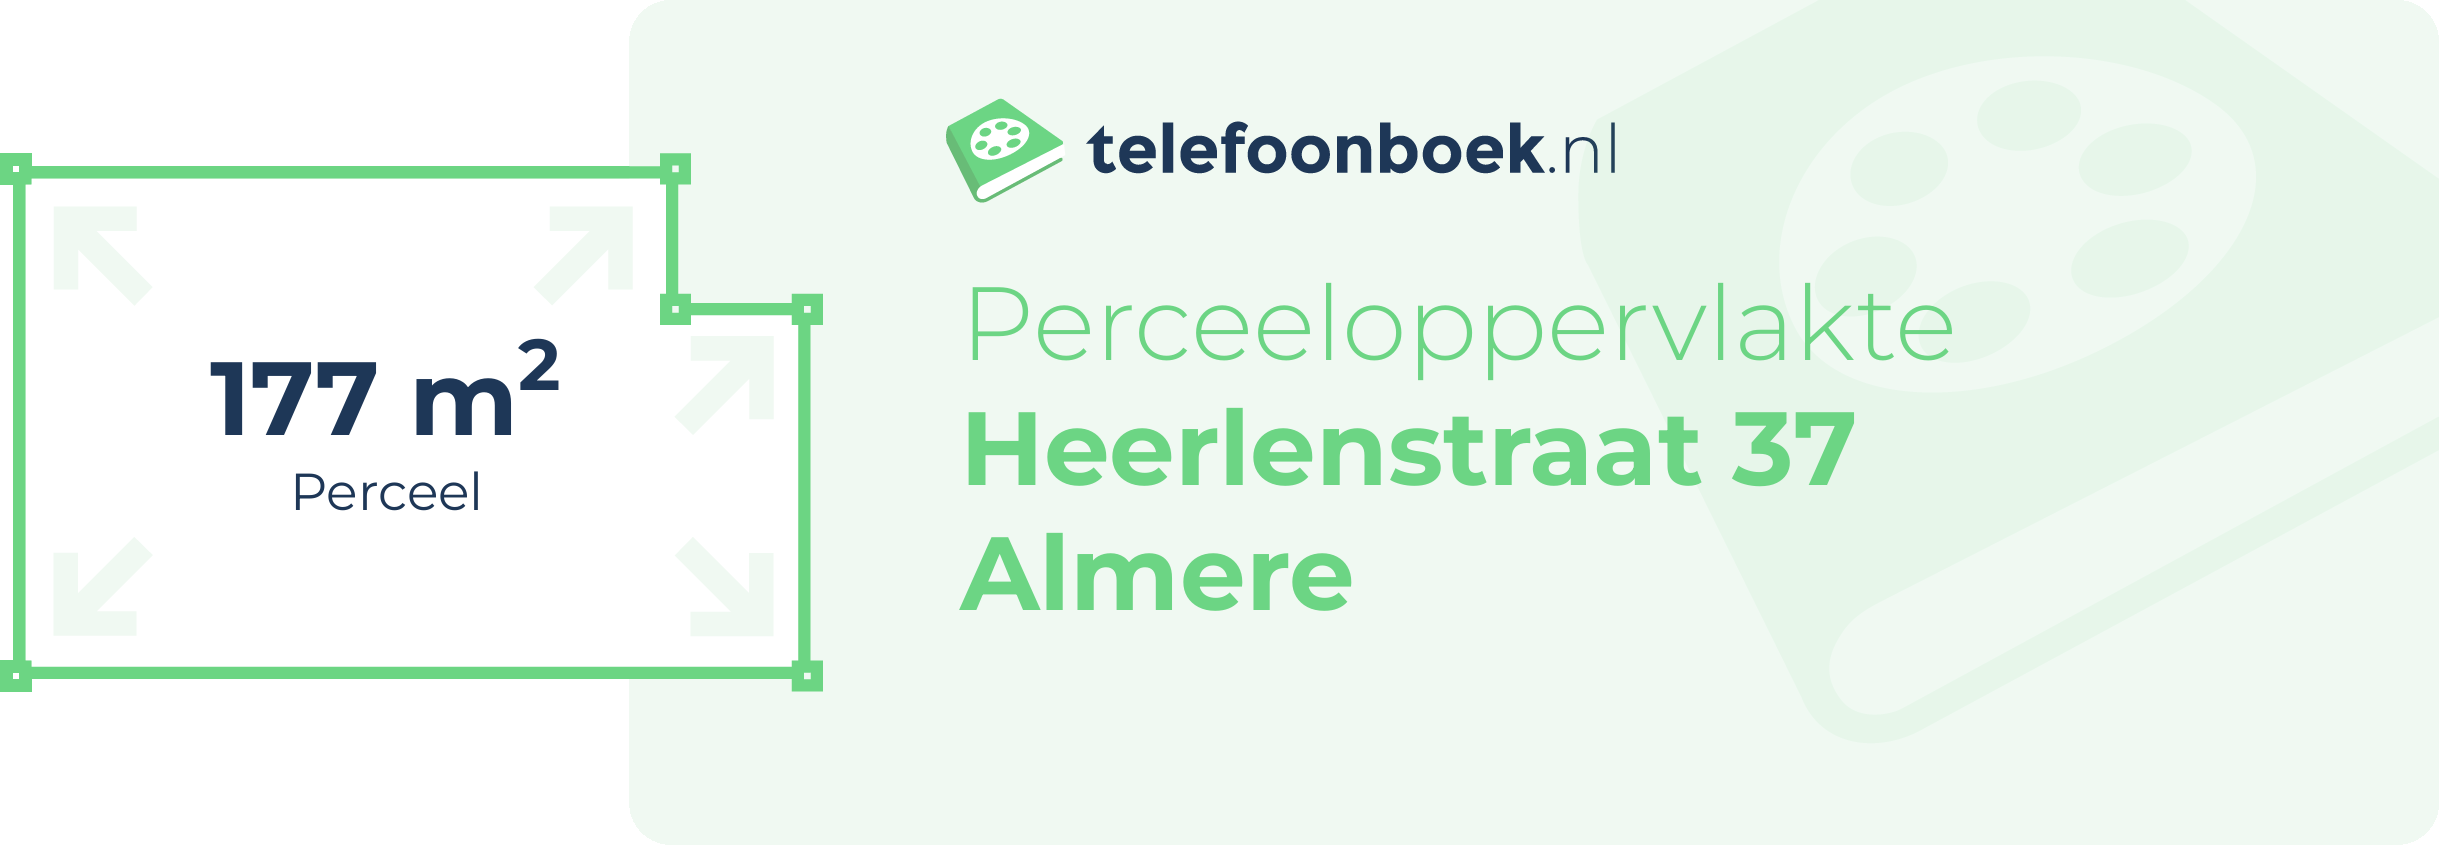 Perceeloppervlakte Heerlenstraat 37 Almere